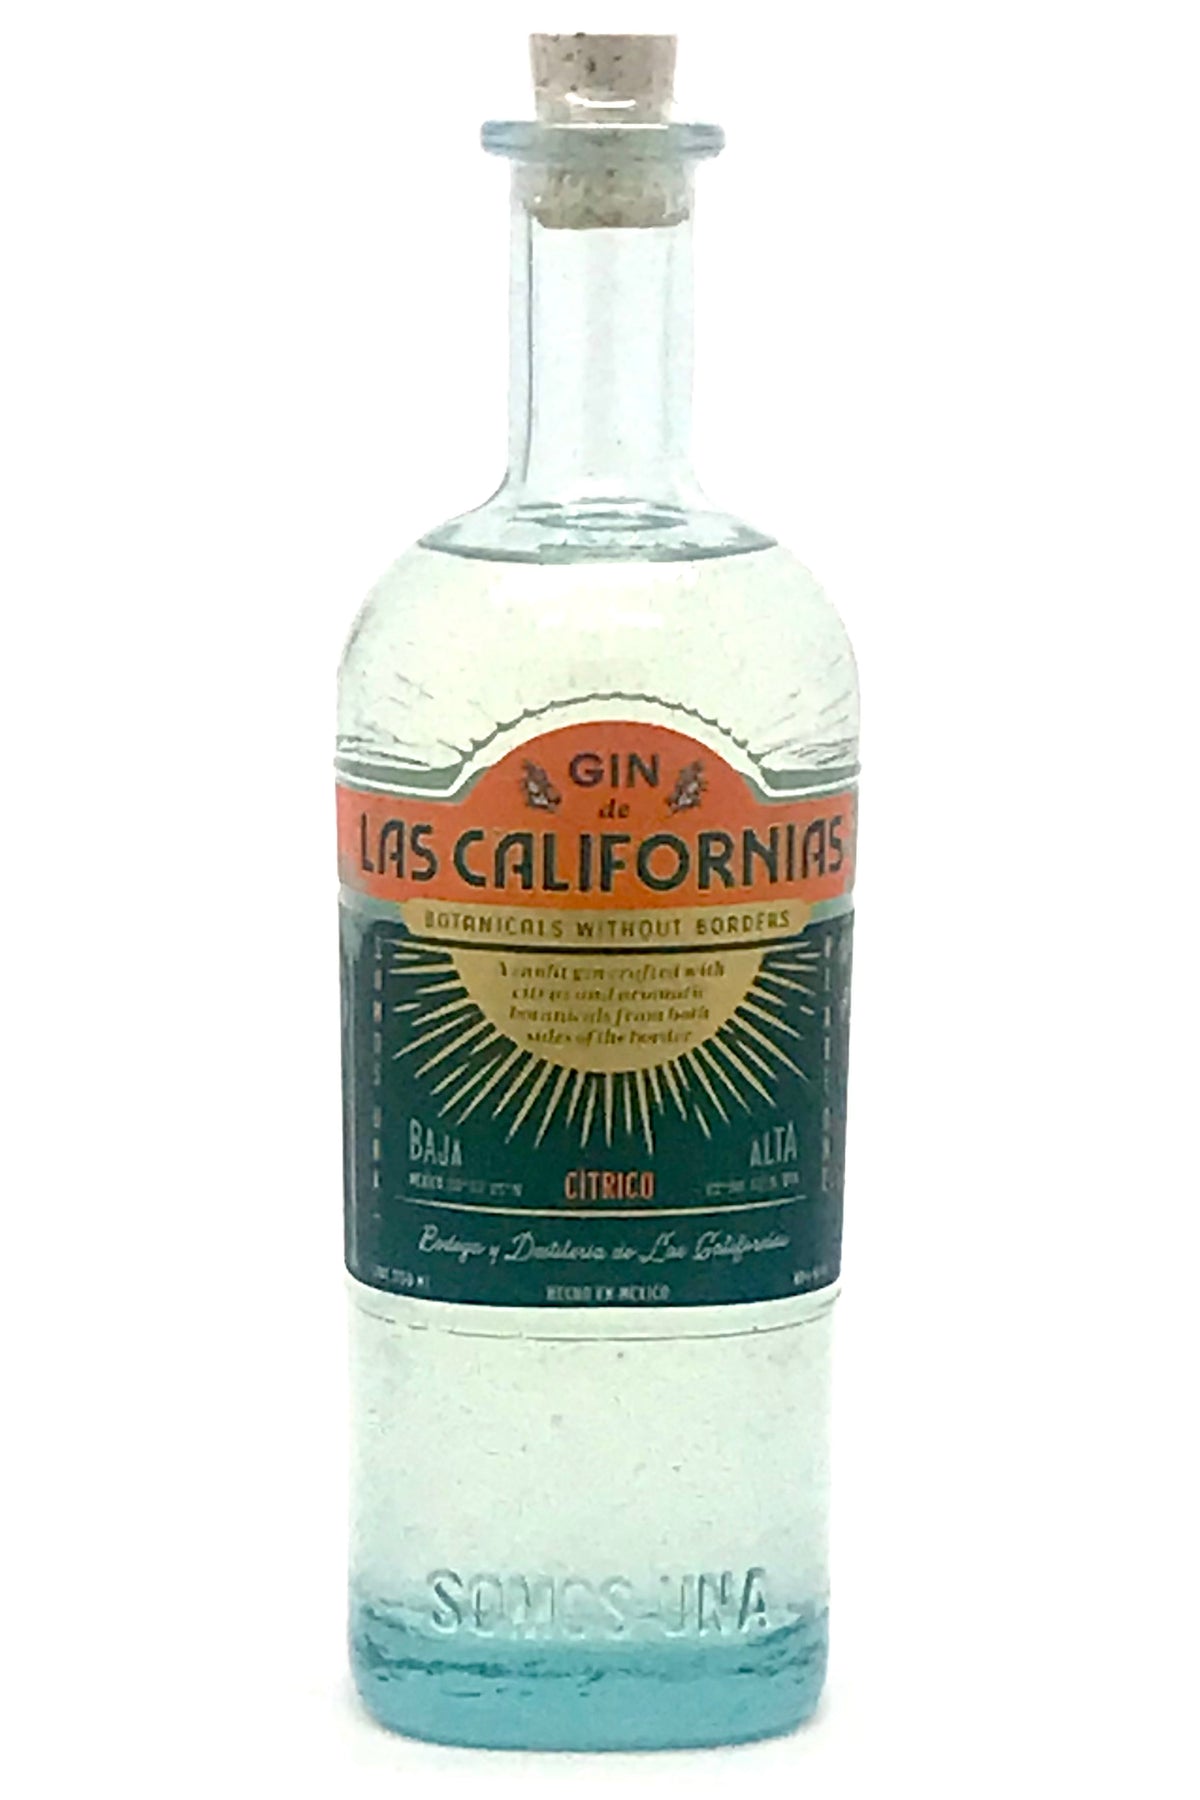 Los Californias Gin Citrico